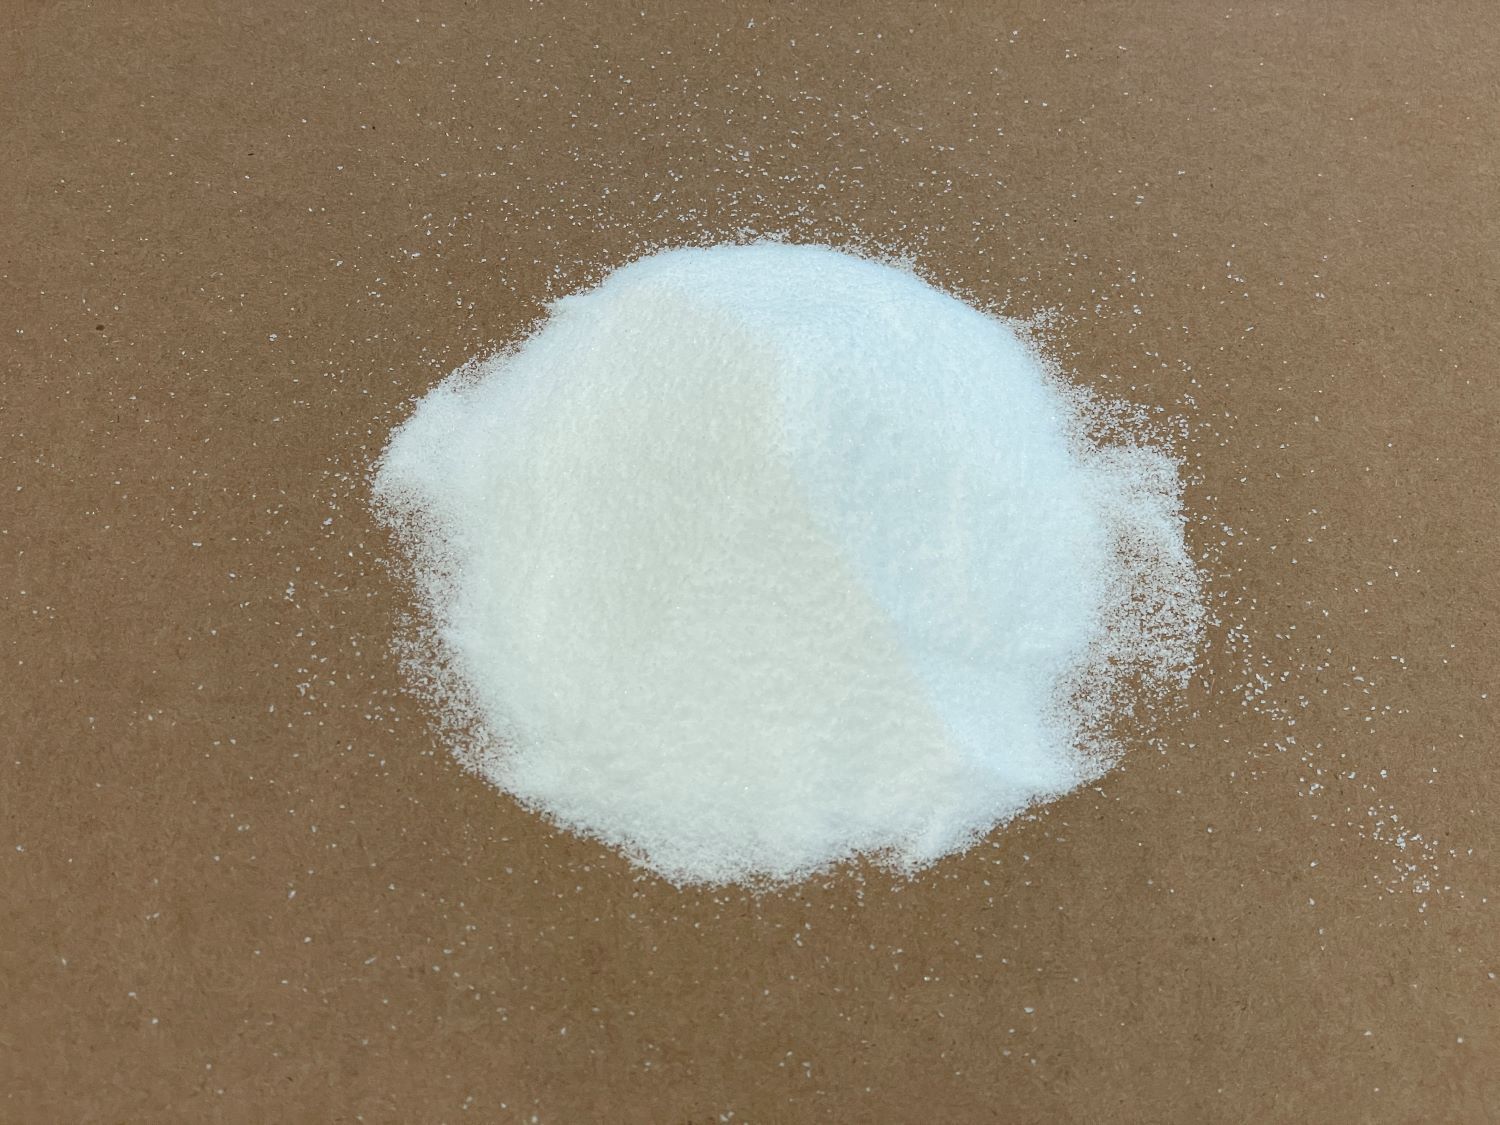 Sandbaggy Sodium Polyacrylate Crystals - Safe & Non Toxic - Made in the USA